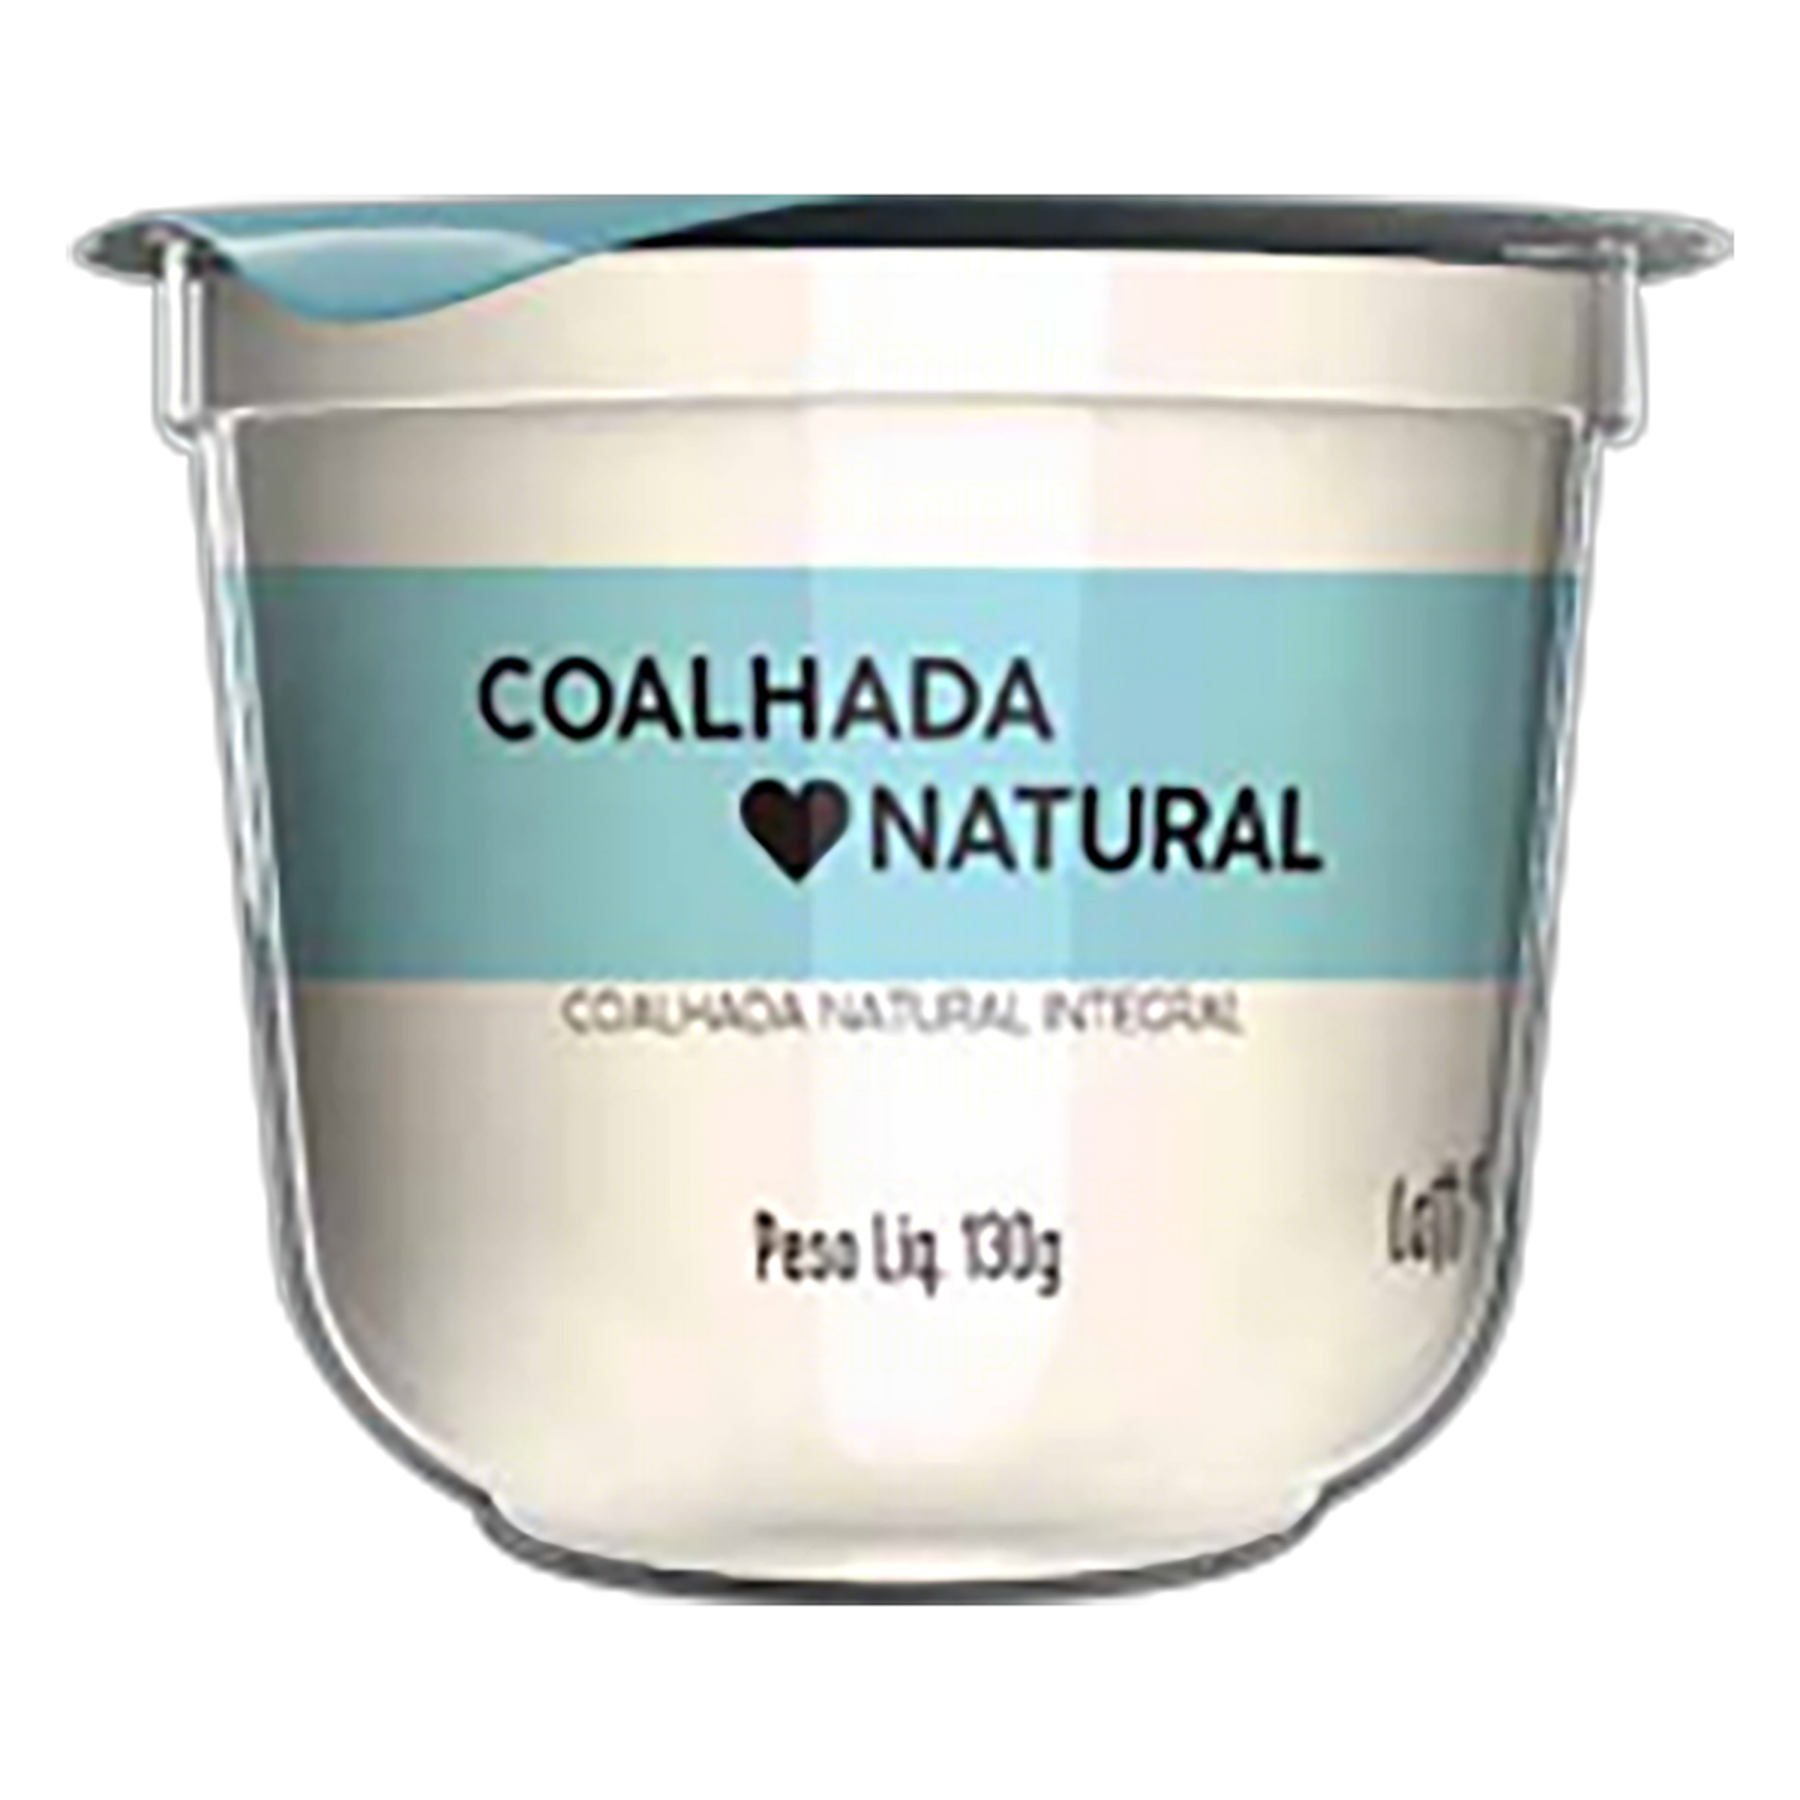 Coalhada Integral Natural Letti a² Pote 130g